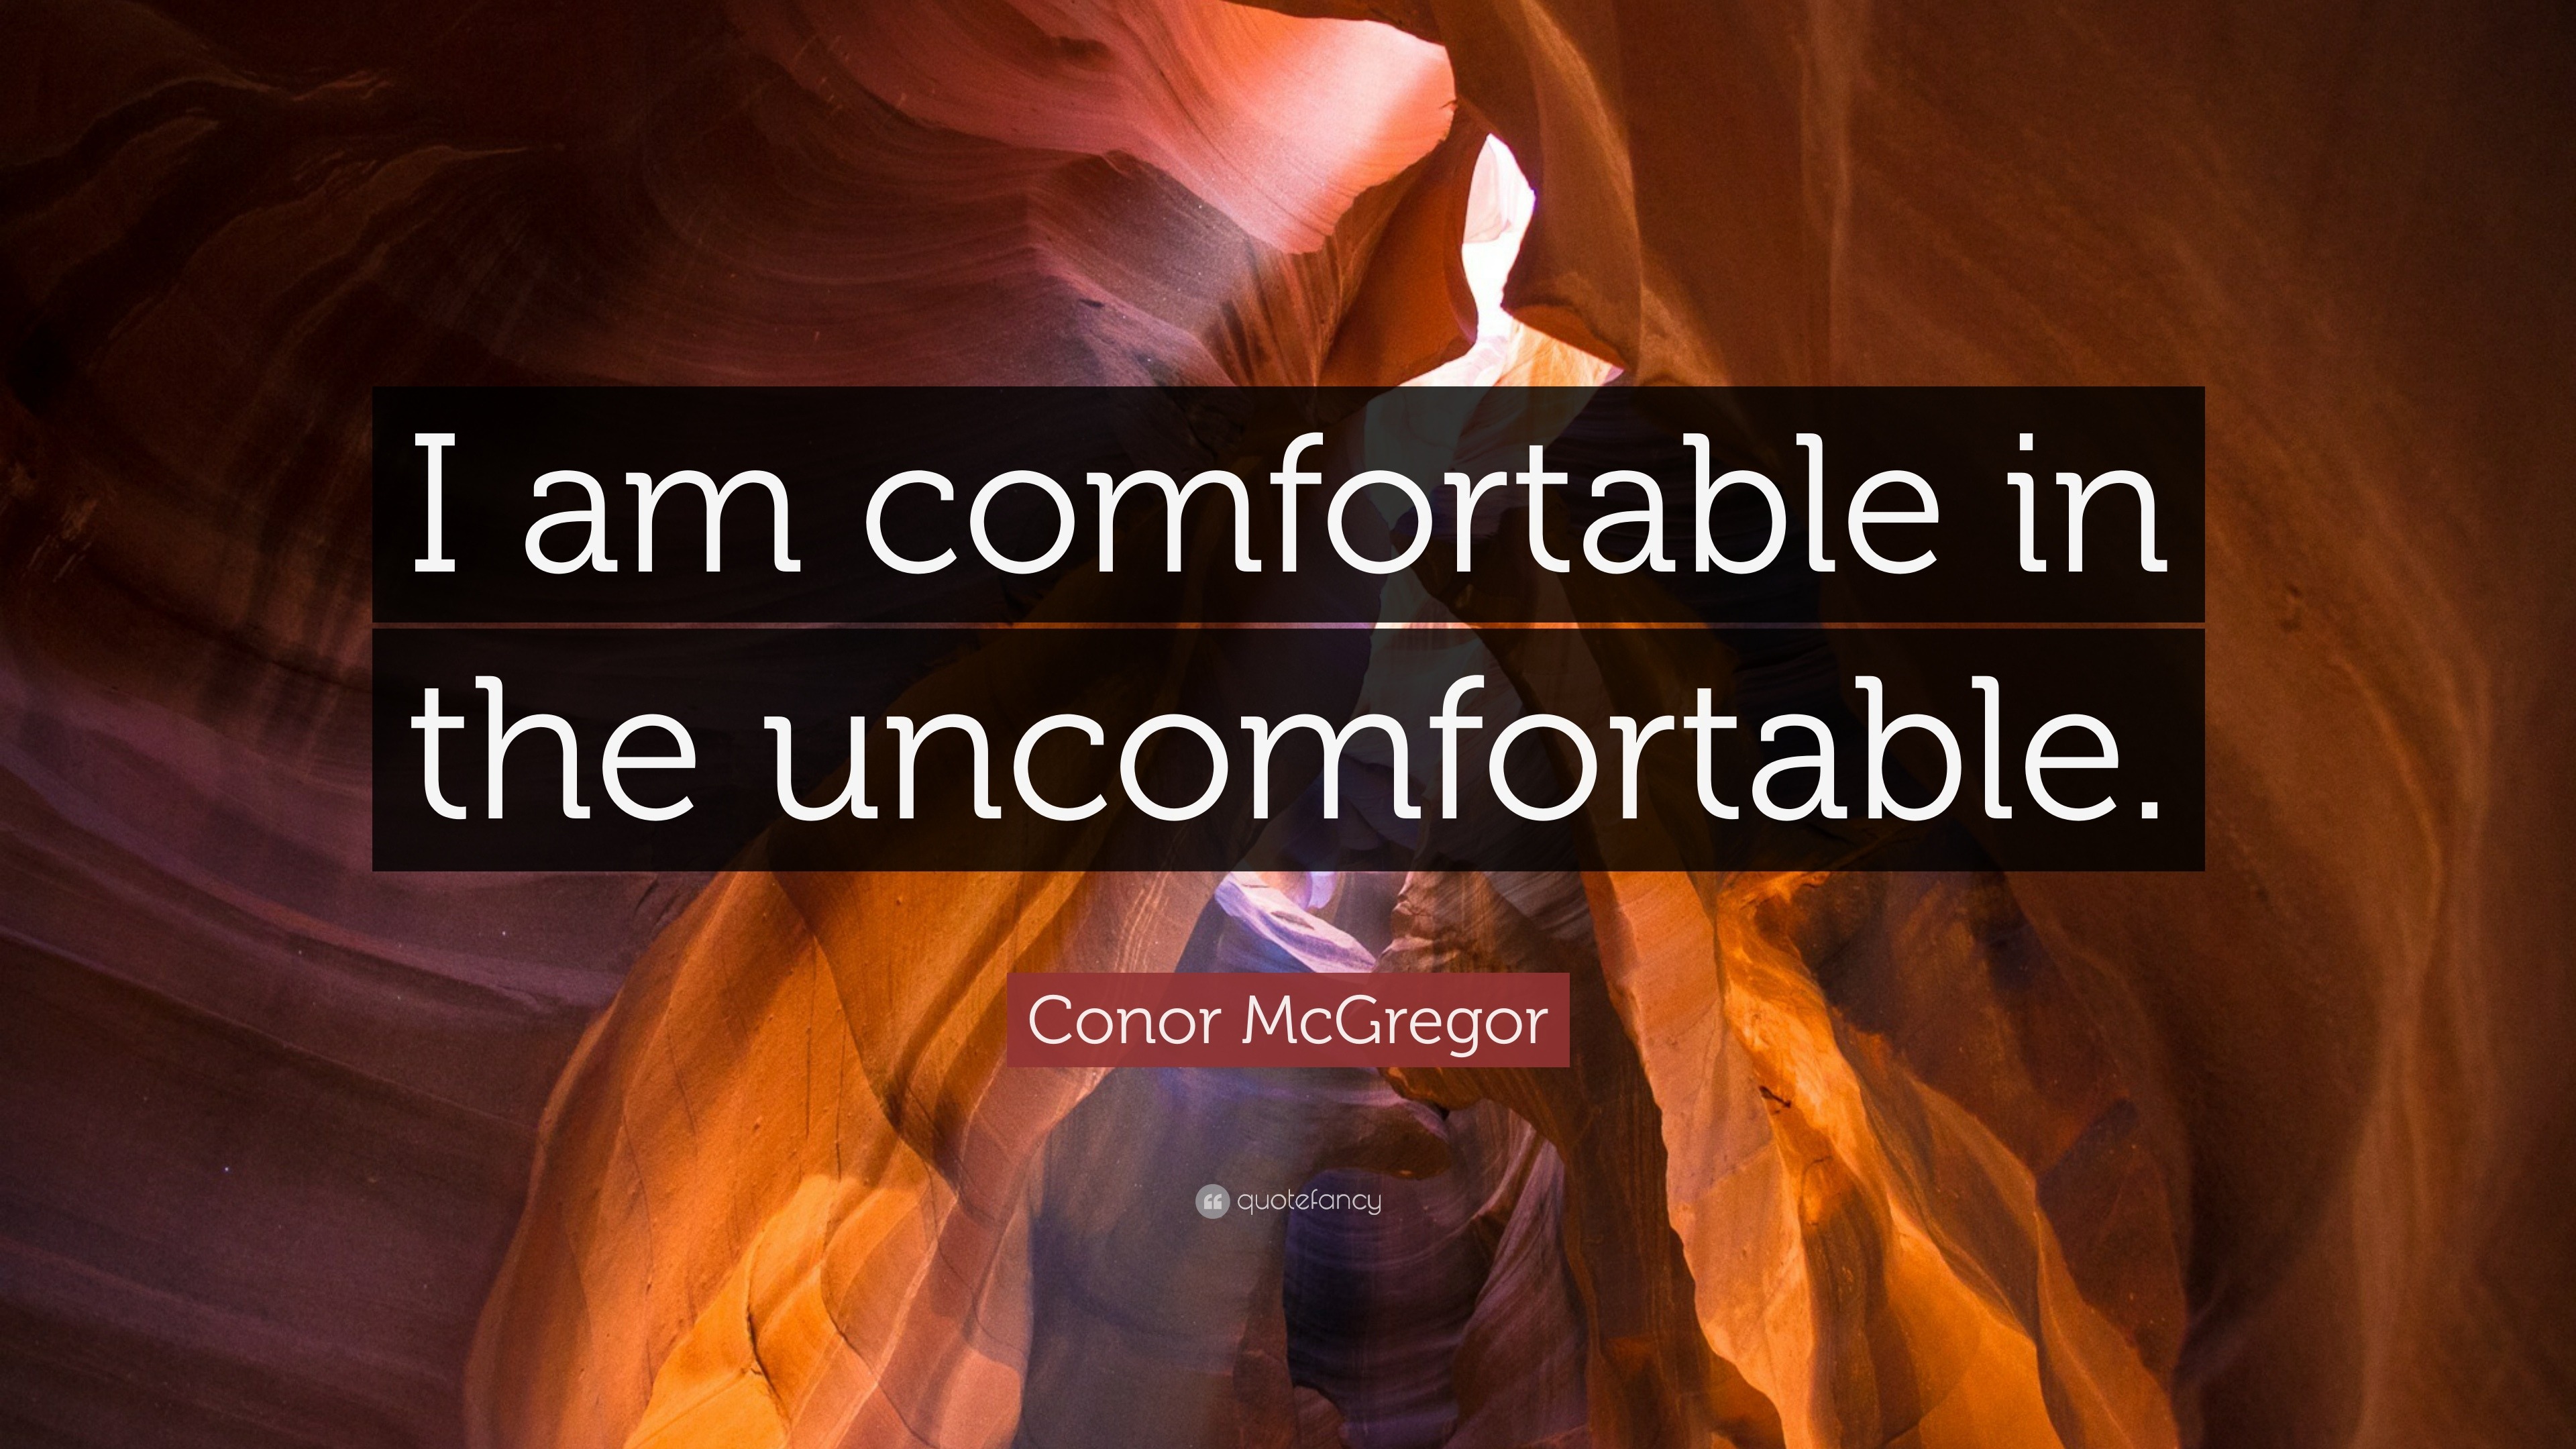 Conor McGregor Quote: “I am comfortable in the uncomfortable.” (16